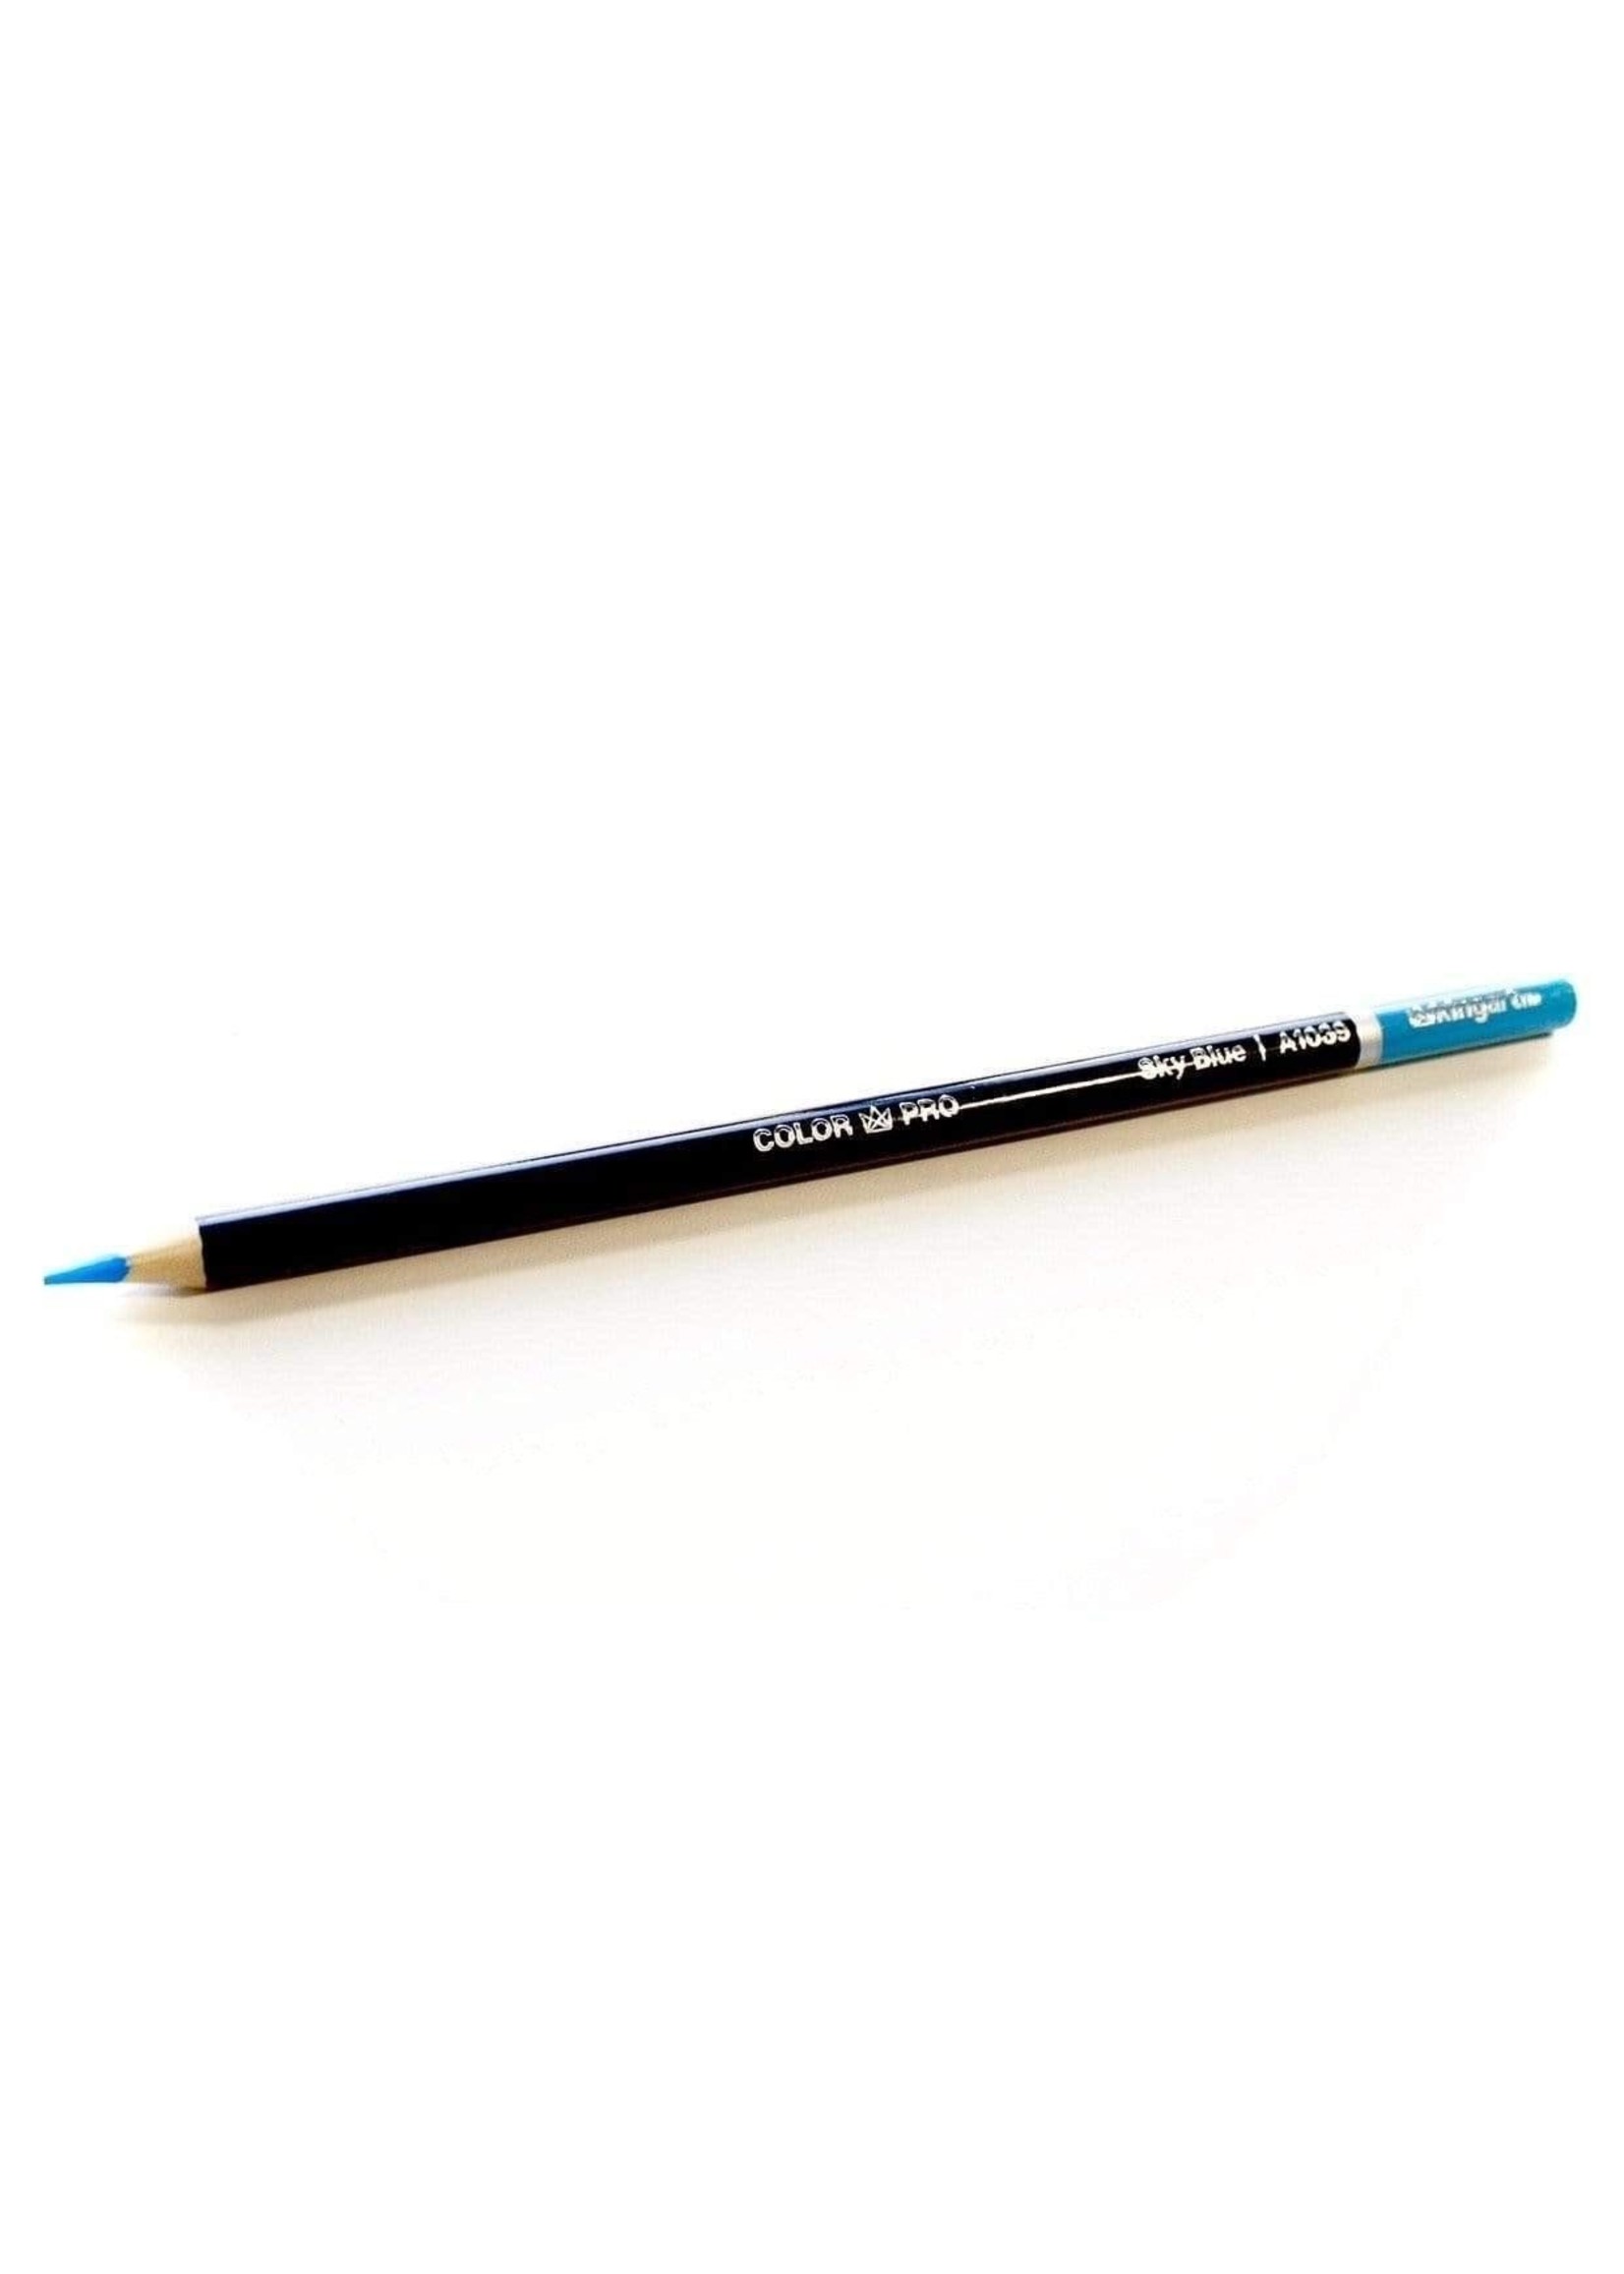 Kingart Soft Core Colored Pencils in Tin - 12 Unique Colors